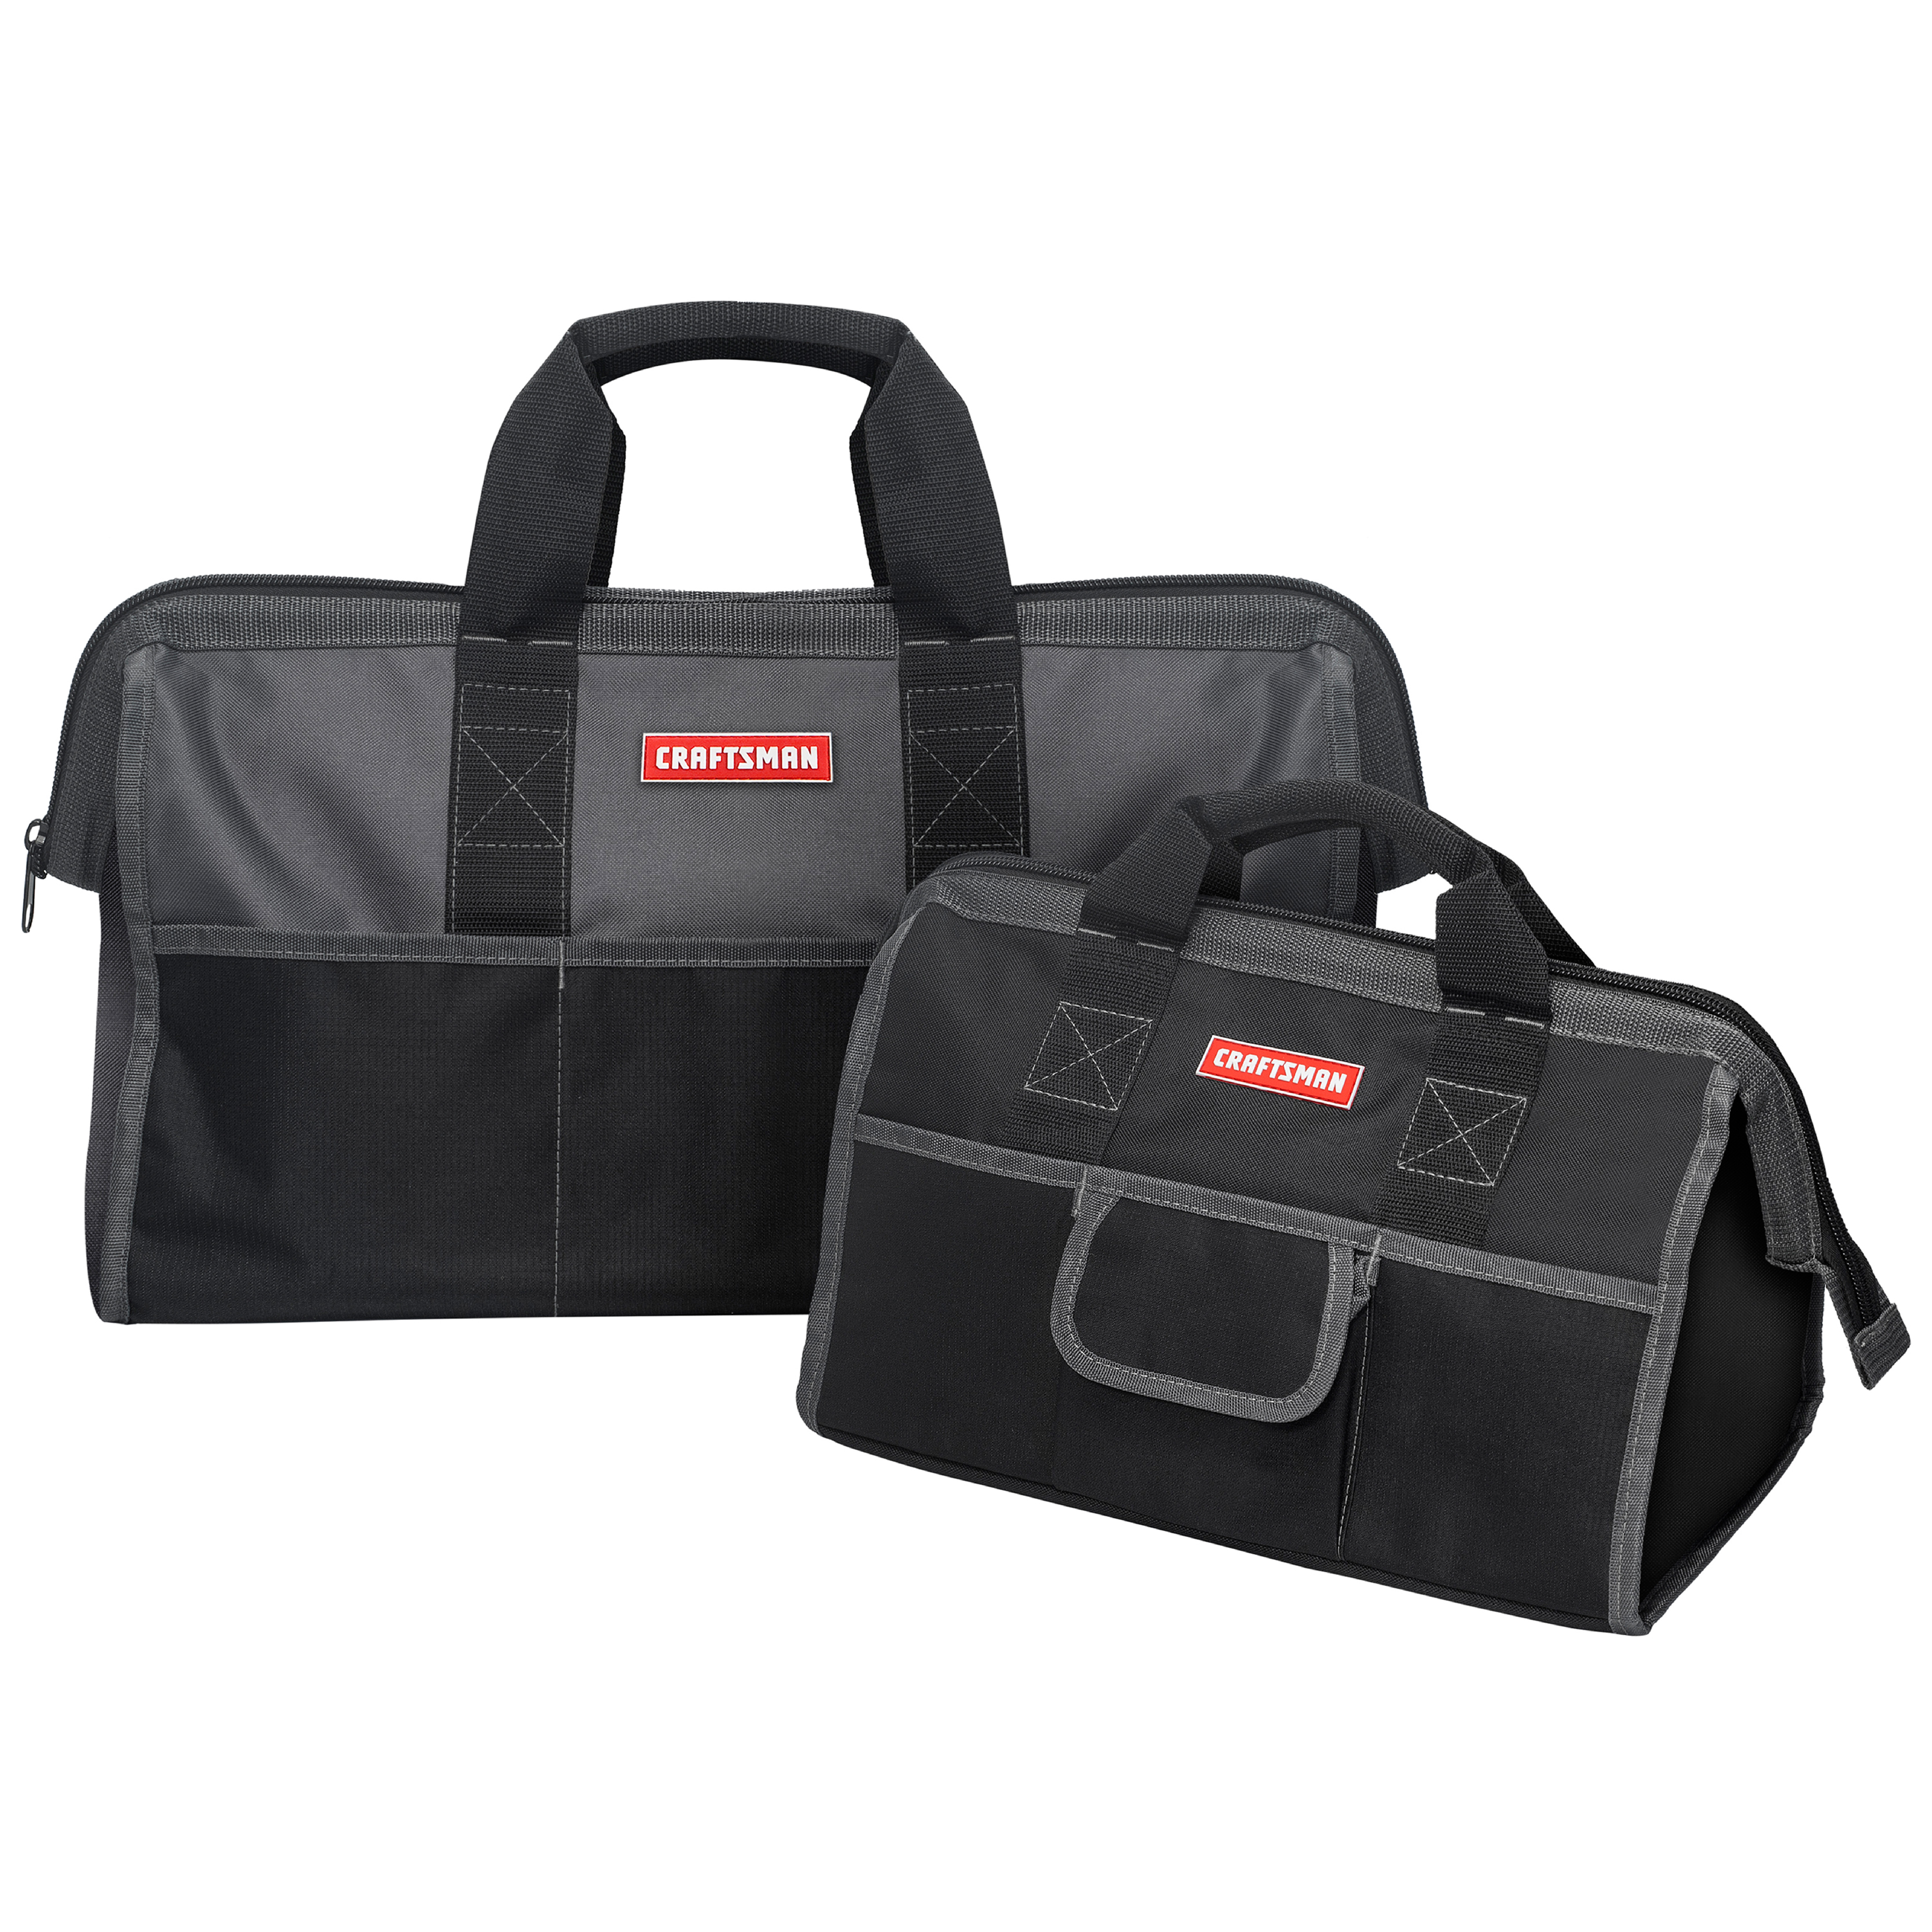 Craftsman 16″ and 20″ Tool Bag Combo—$17.99!